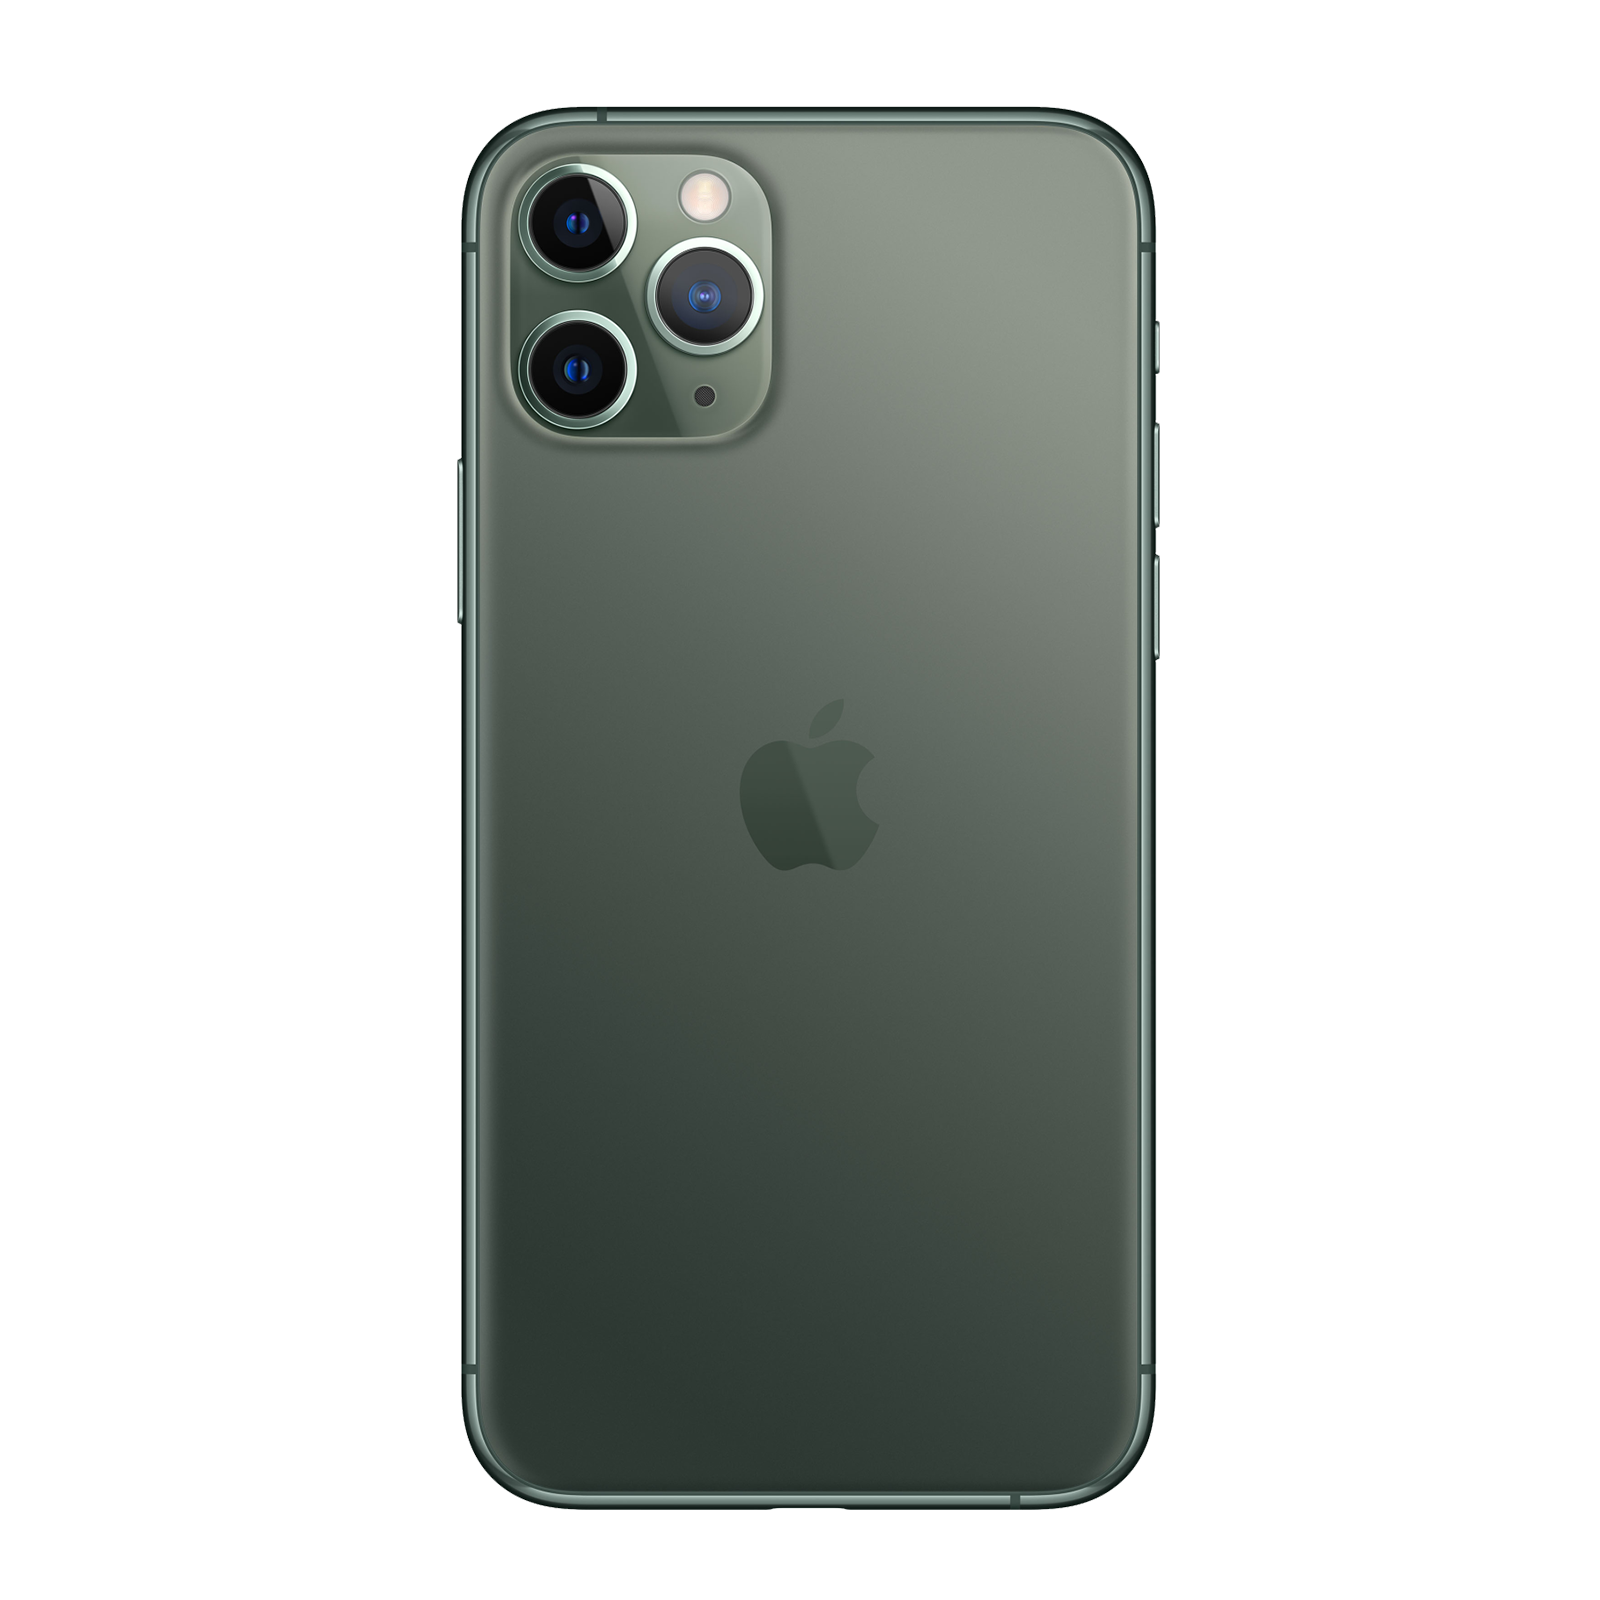 Apple iPhone 11 Pro 256GB Green Fair AT&T – Loop Mobile